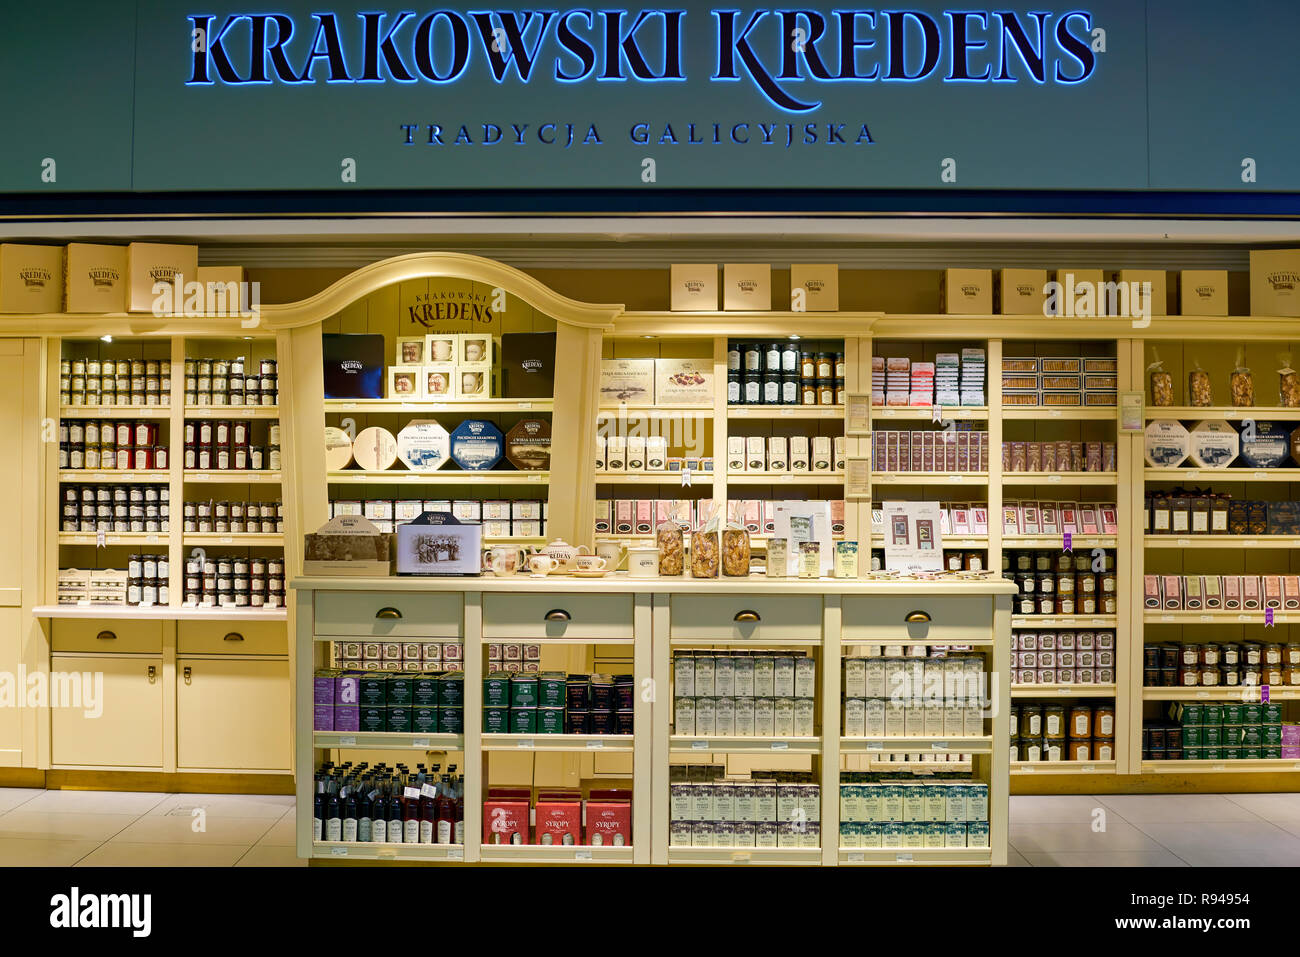 Krakowski kredens hi-res stock photography and images - Alamy